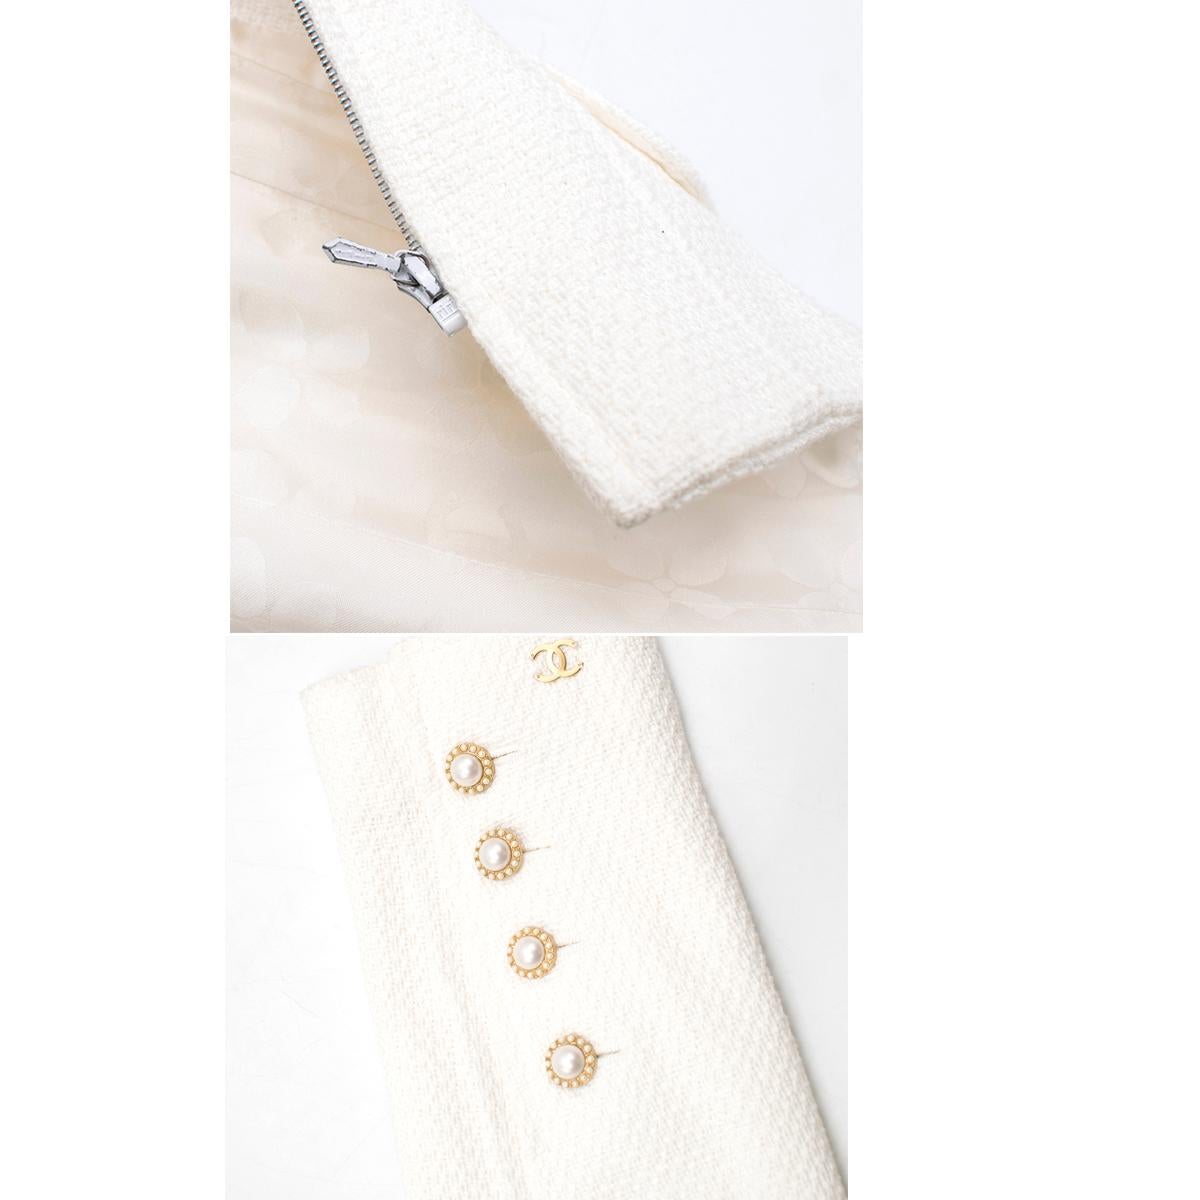 Chanel White Tweed Classic Jacket - Size US 4 2